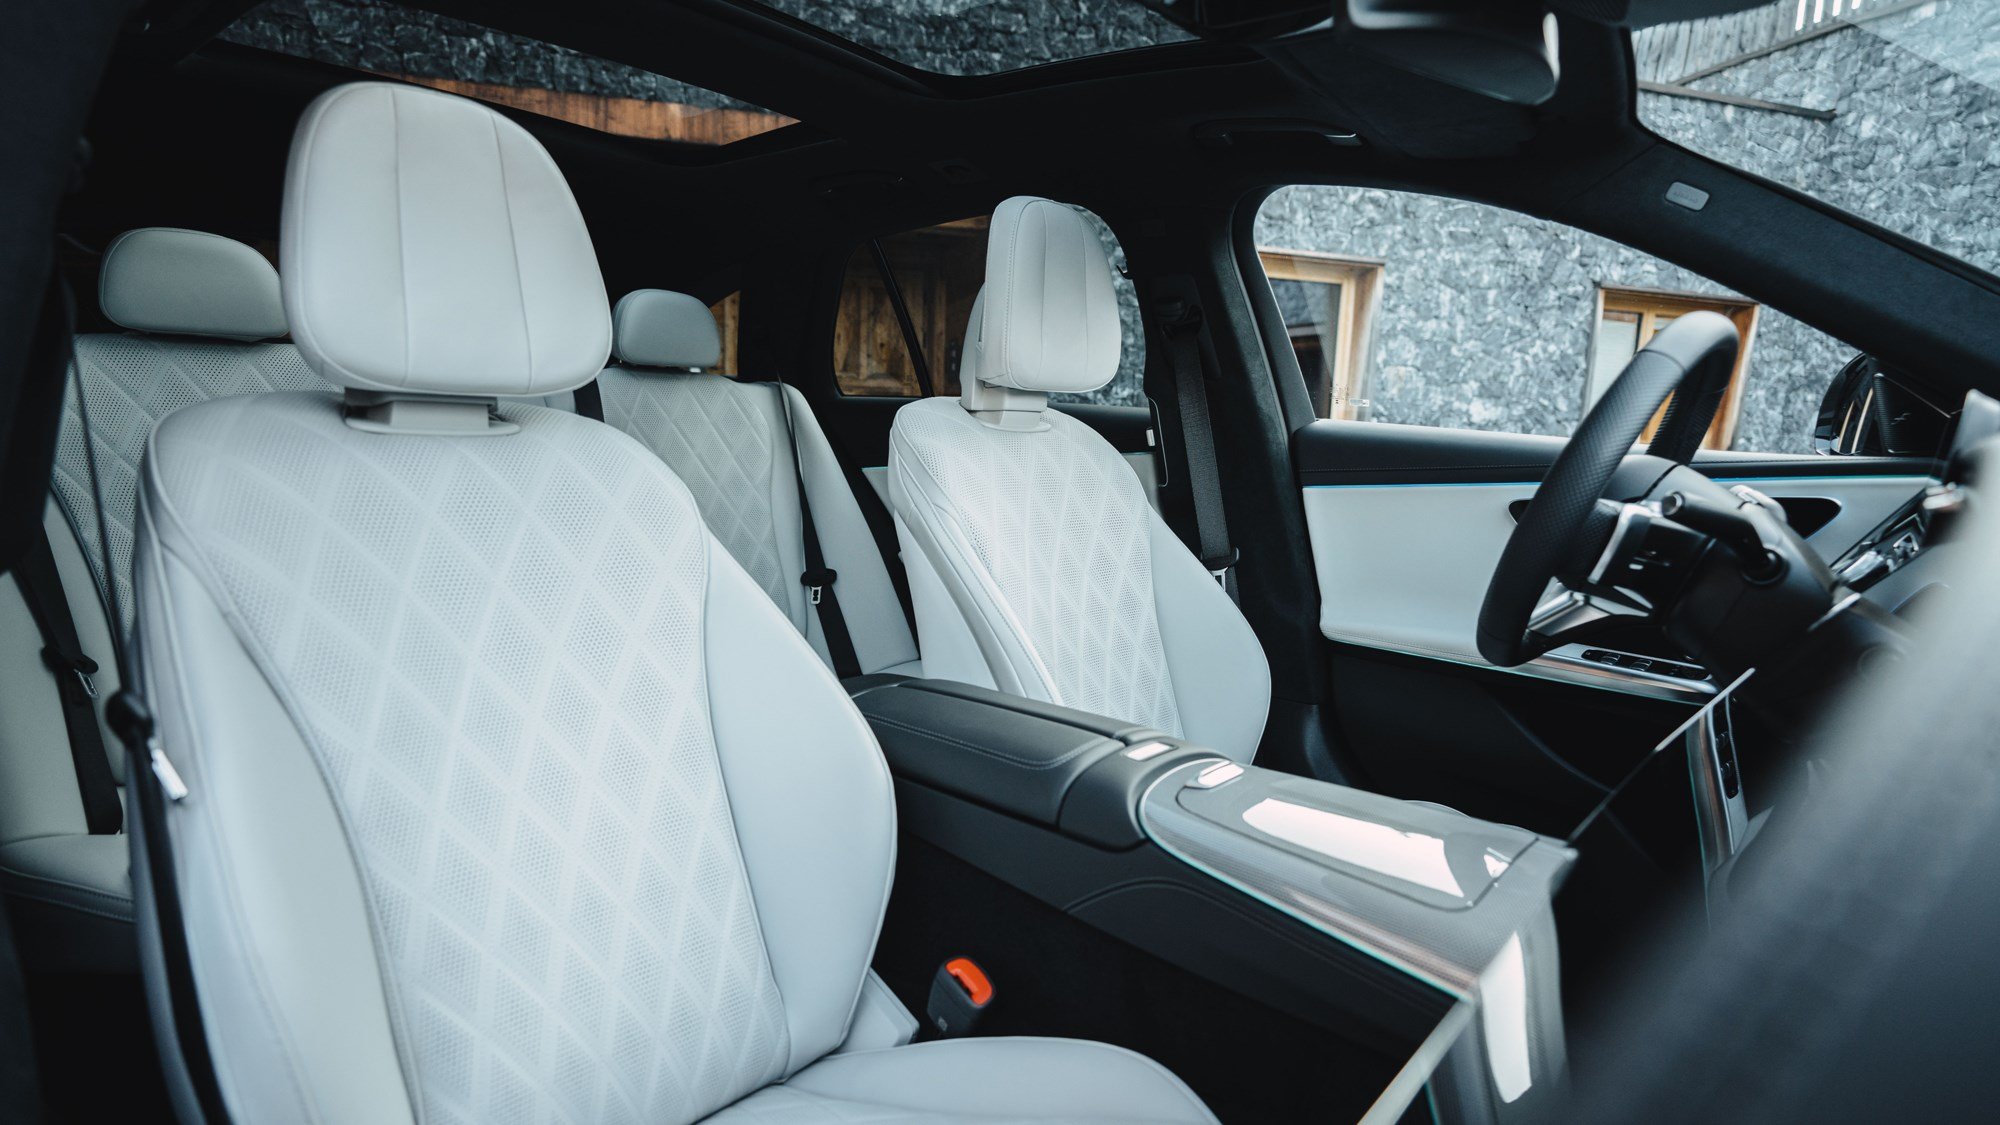 Mercedes-Benz E300 interior - Seats